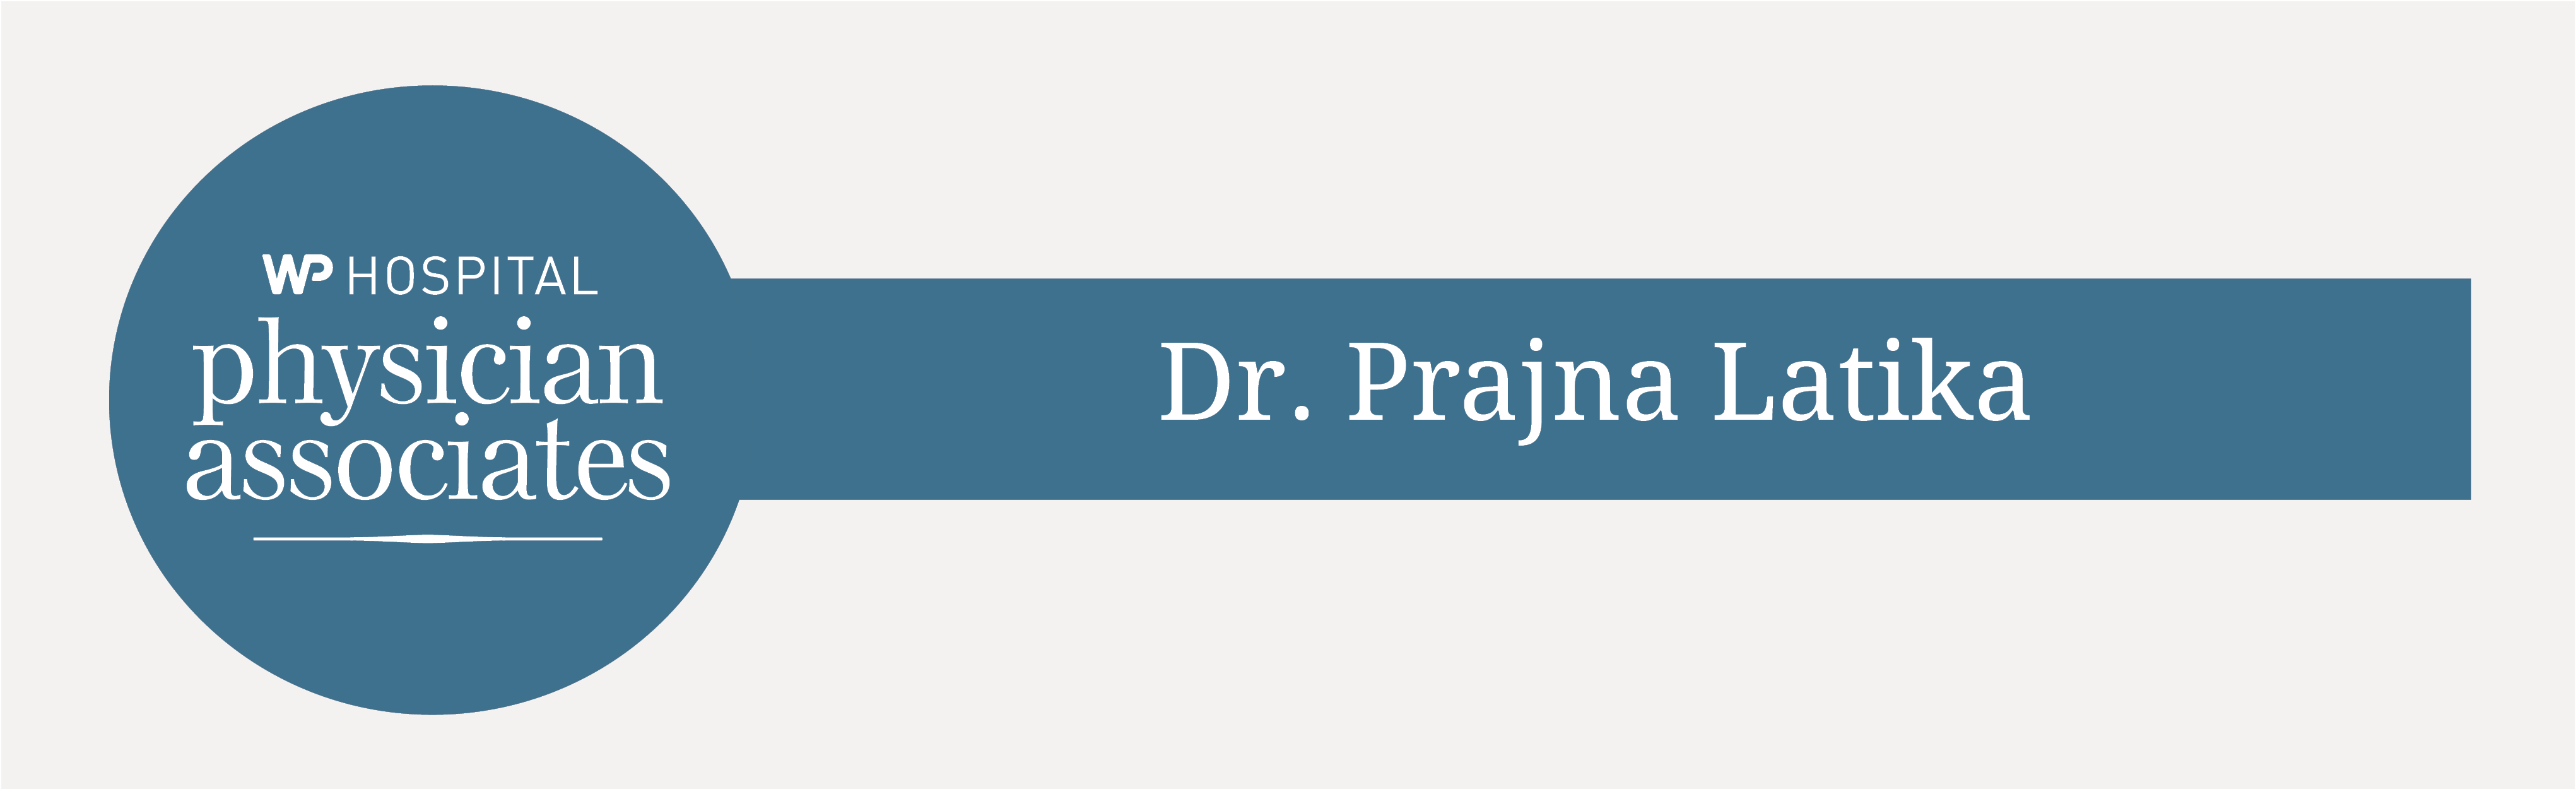 White Plains Hospital Welcomes Dr. Prajna Latika to Internal Medicine Department